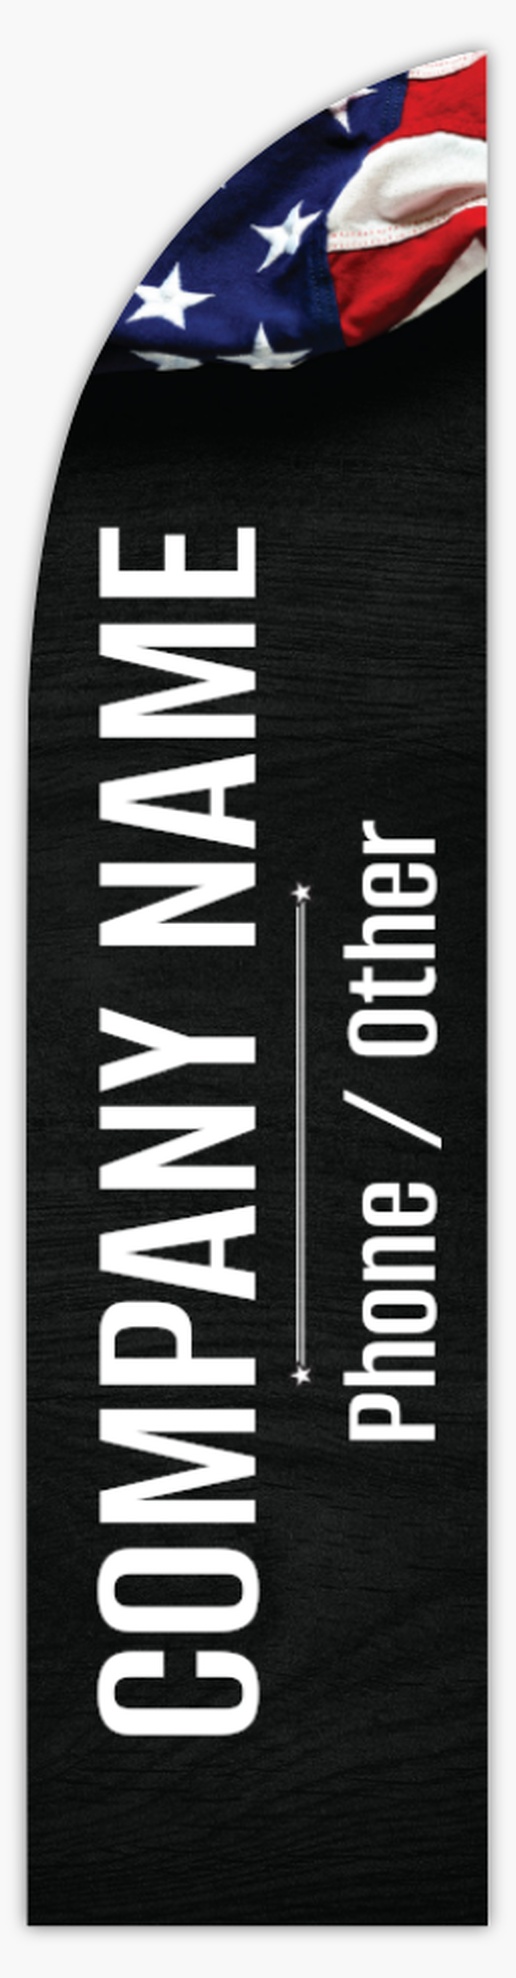 A vertical campaign black white design for Election